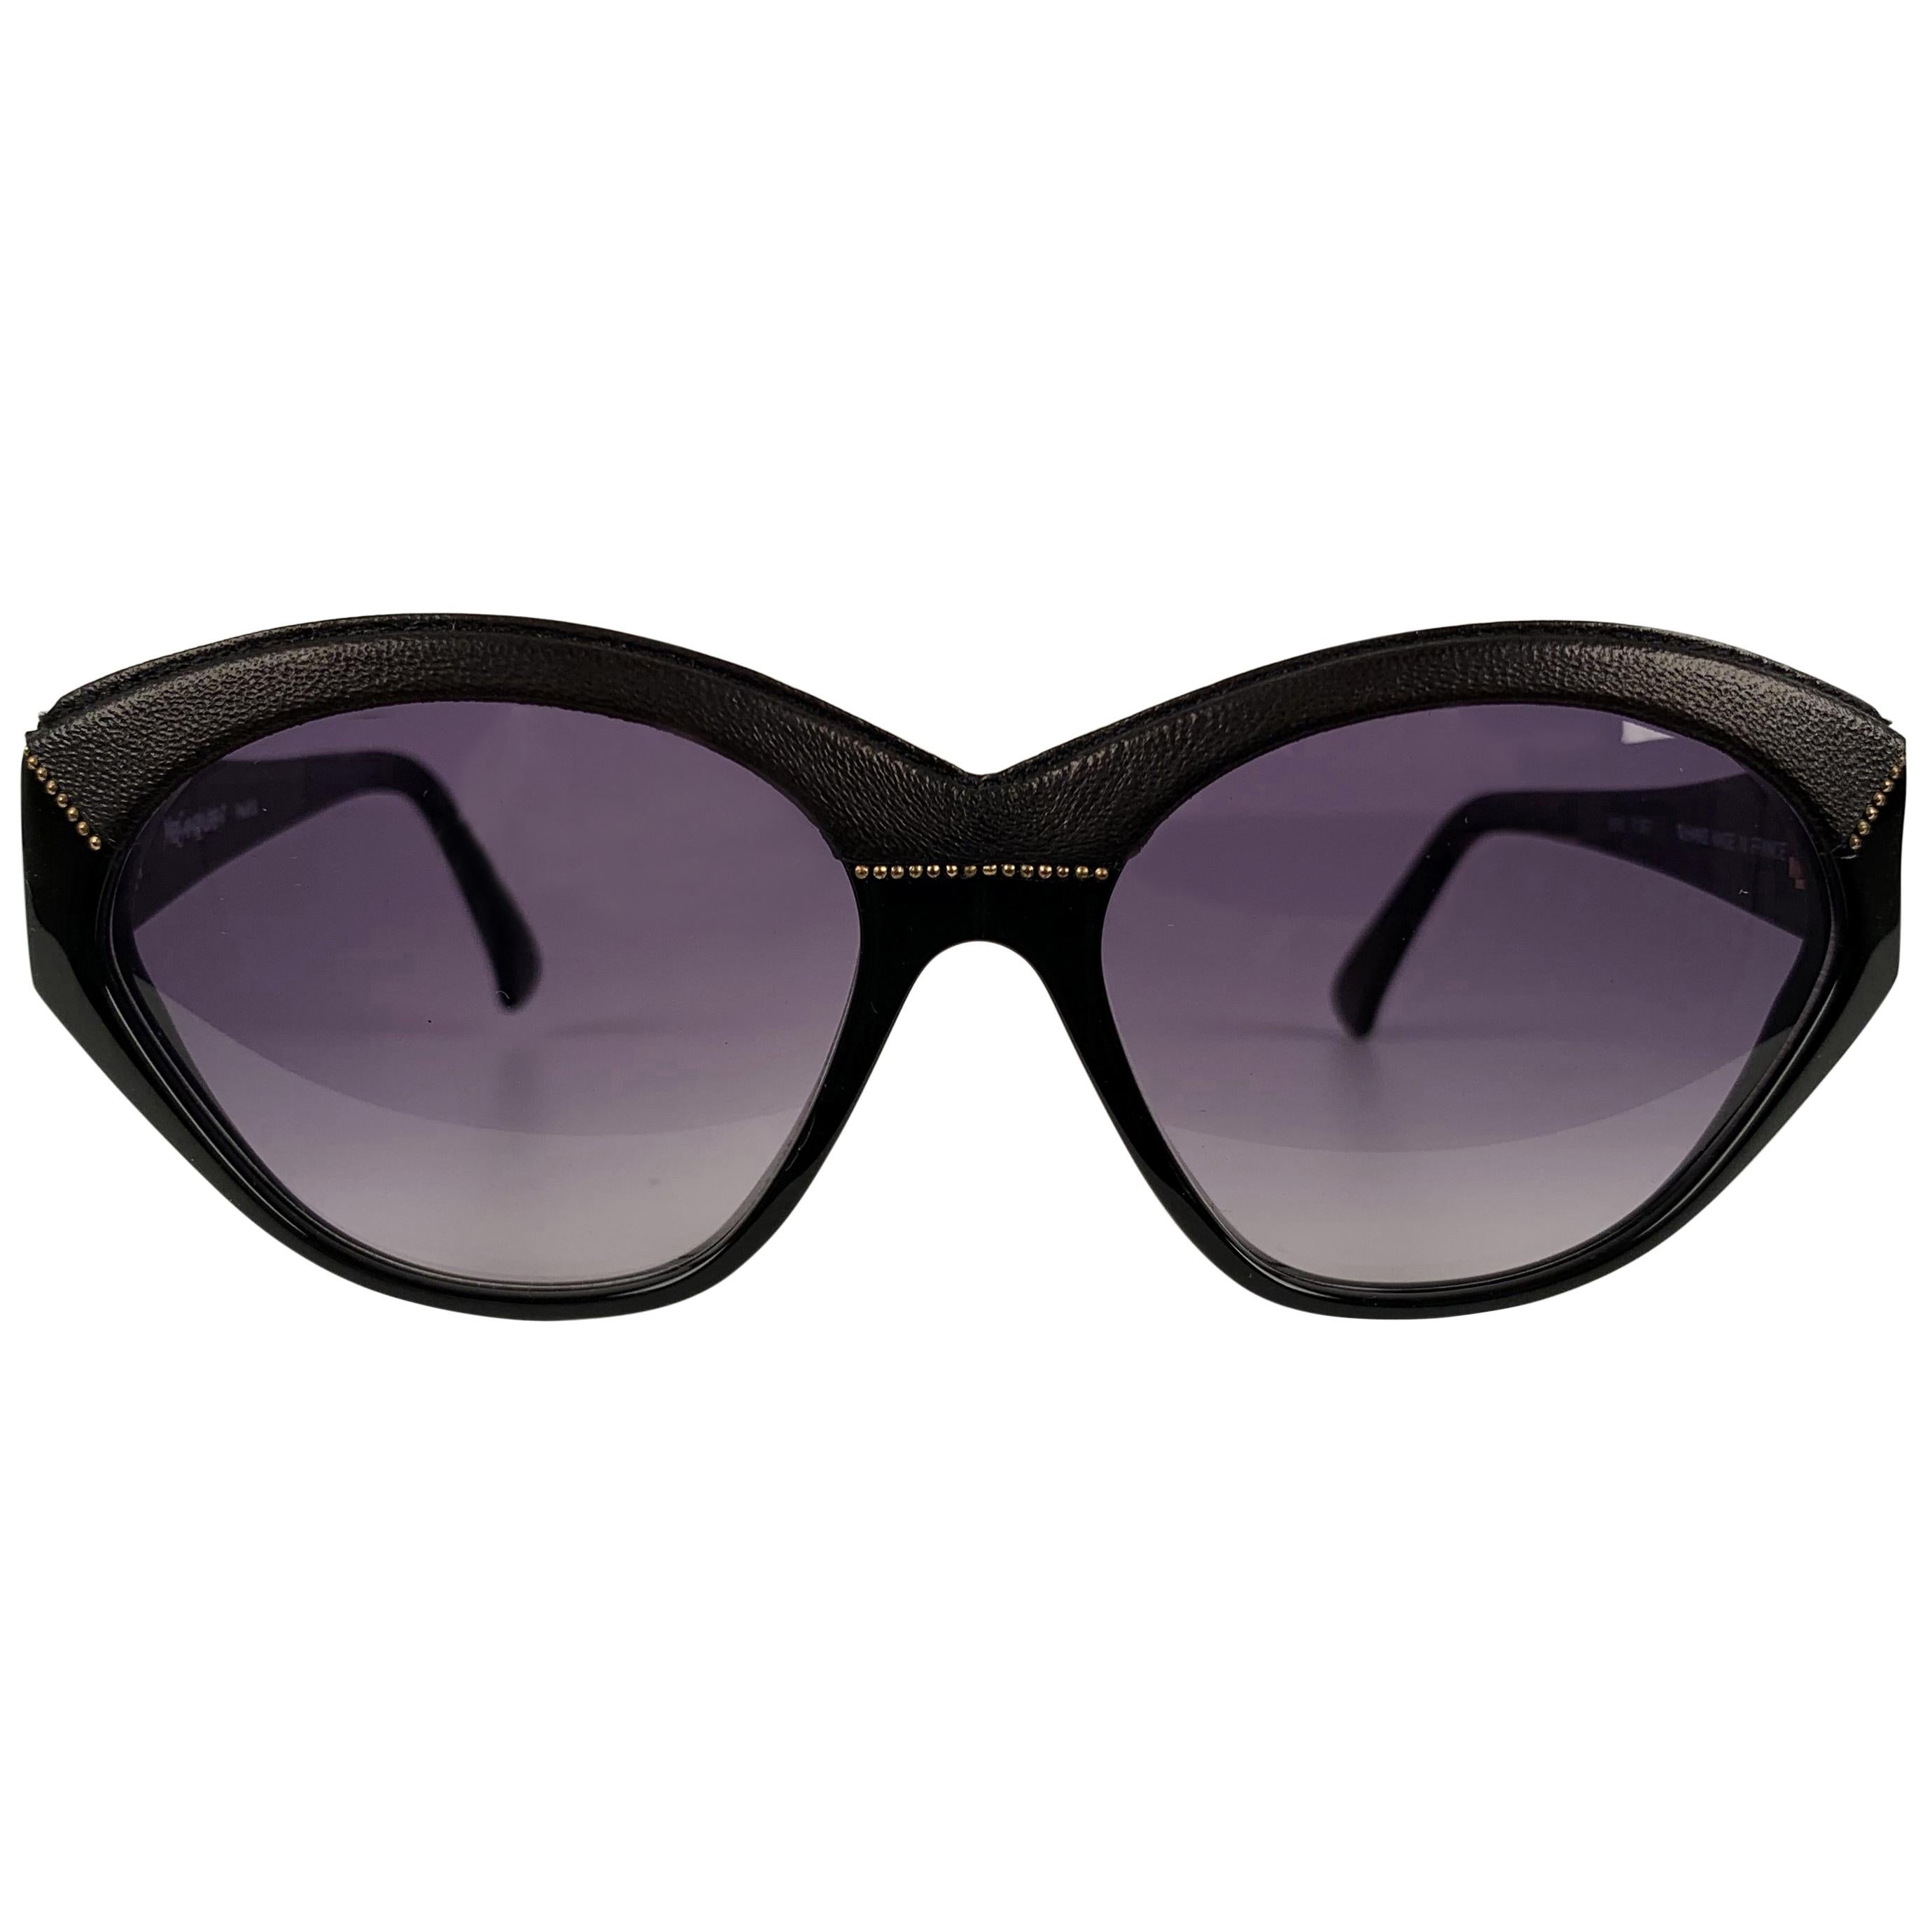 Yves Saint Laurent Vintage Black Sunglasses 8916 P367 with Leather